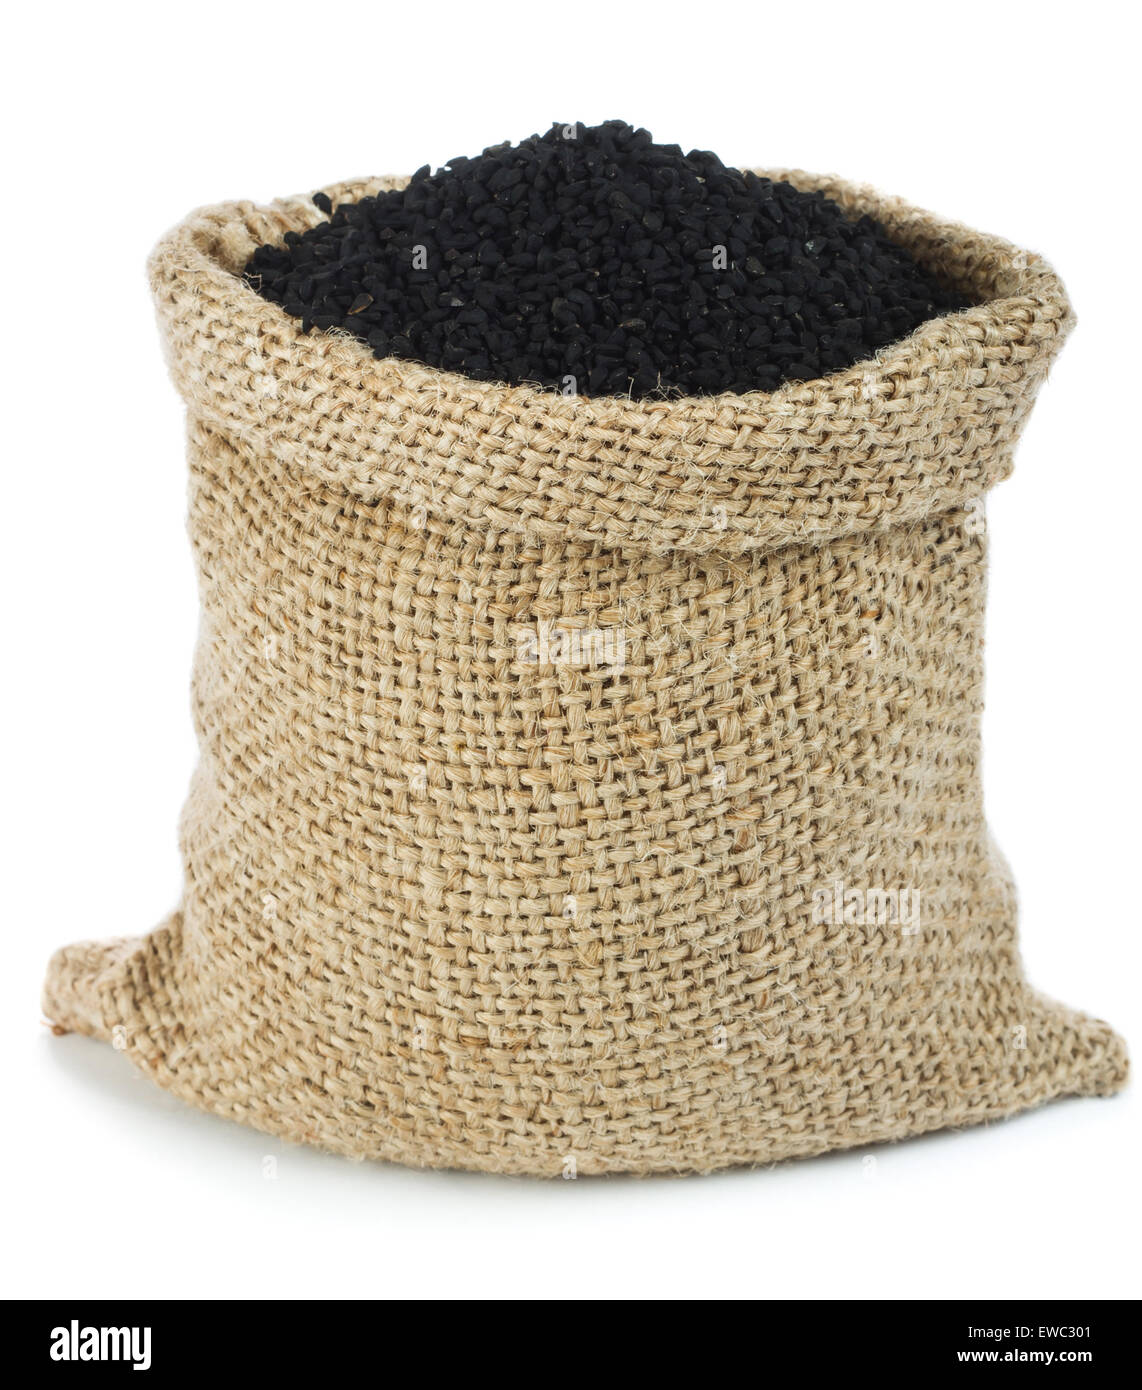 Nigella sativa (Black cumin) in small sack Stock Photo